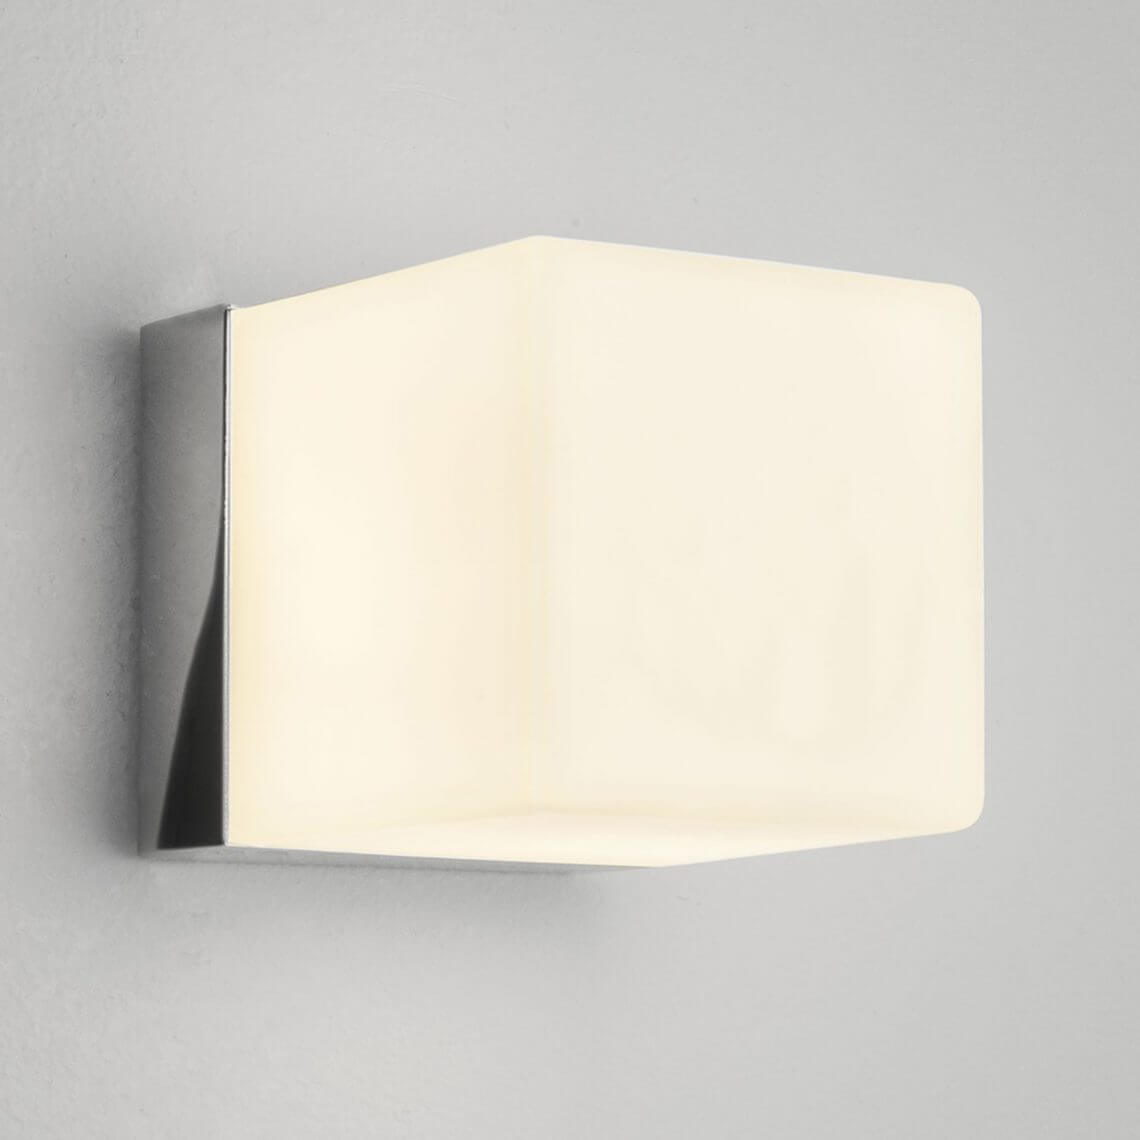 cube shaped wall mounted LED bathroom light